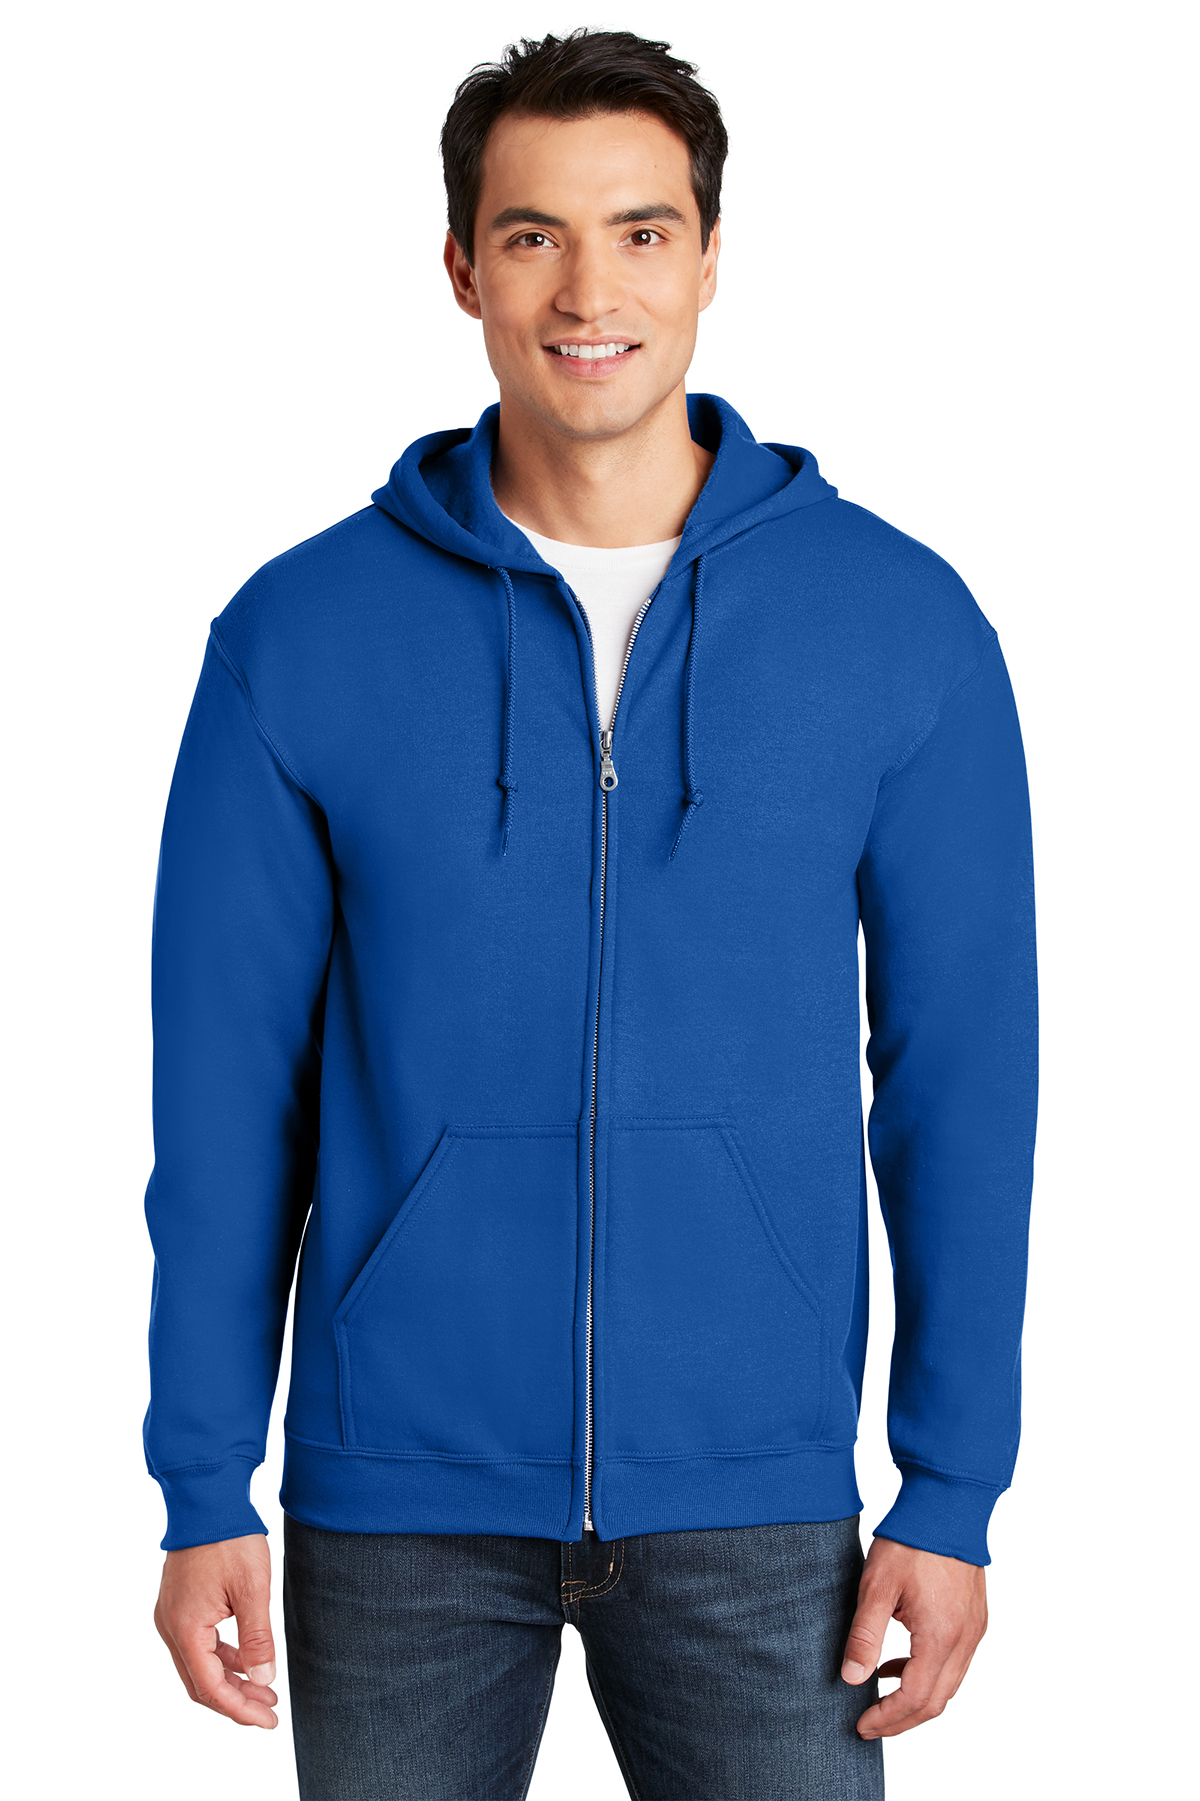 Gildan 18600 50/50 Full Zip Hooded Sweatshirt